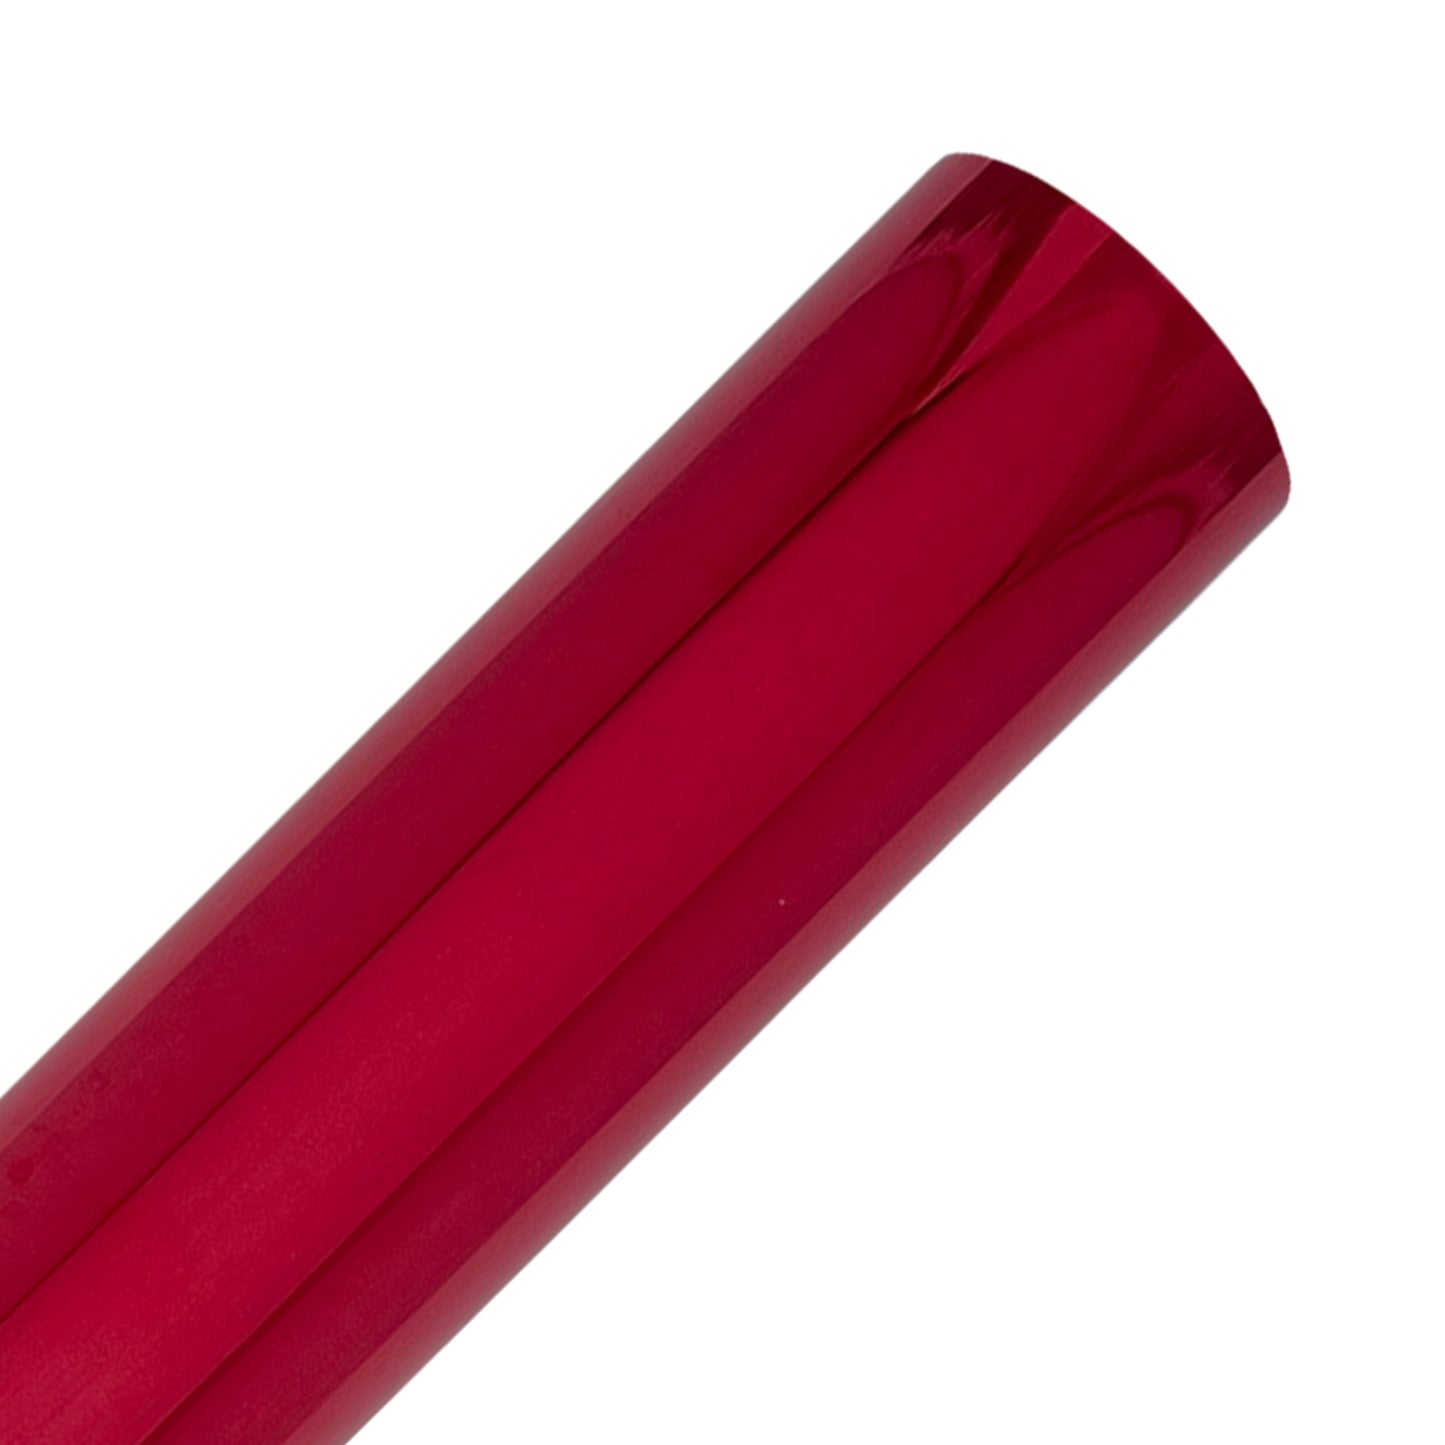 Red Metallic Foil Heat Transfer Vinyl Rolls By Craftables